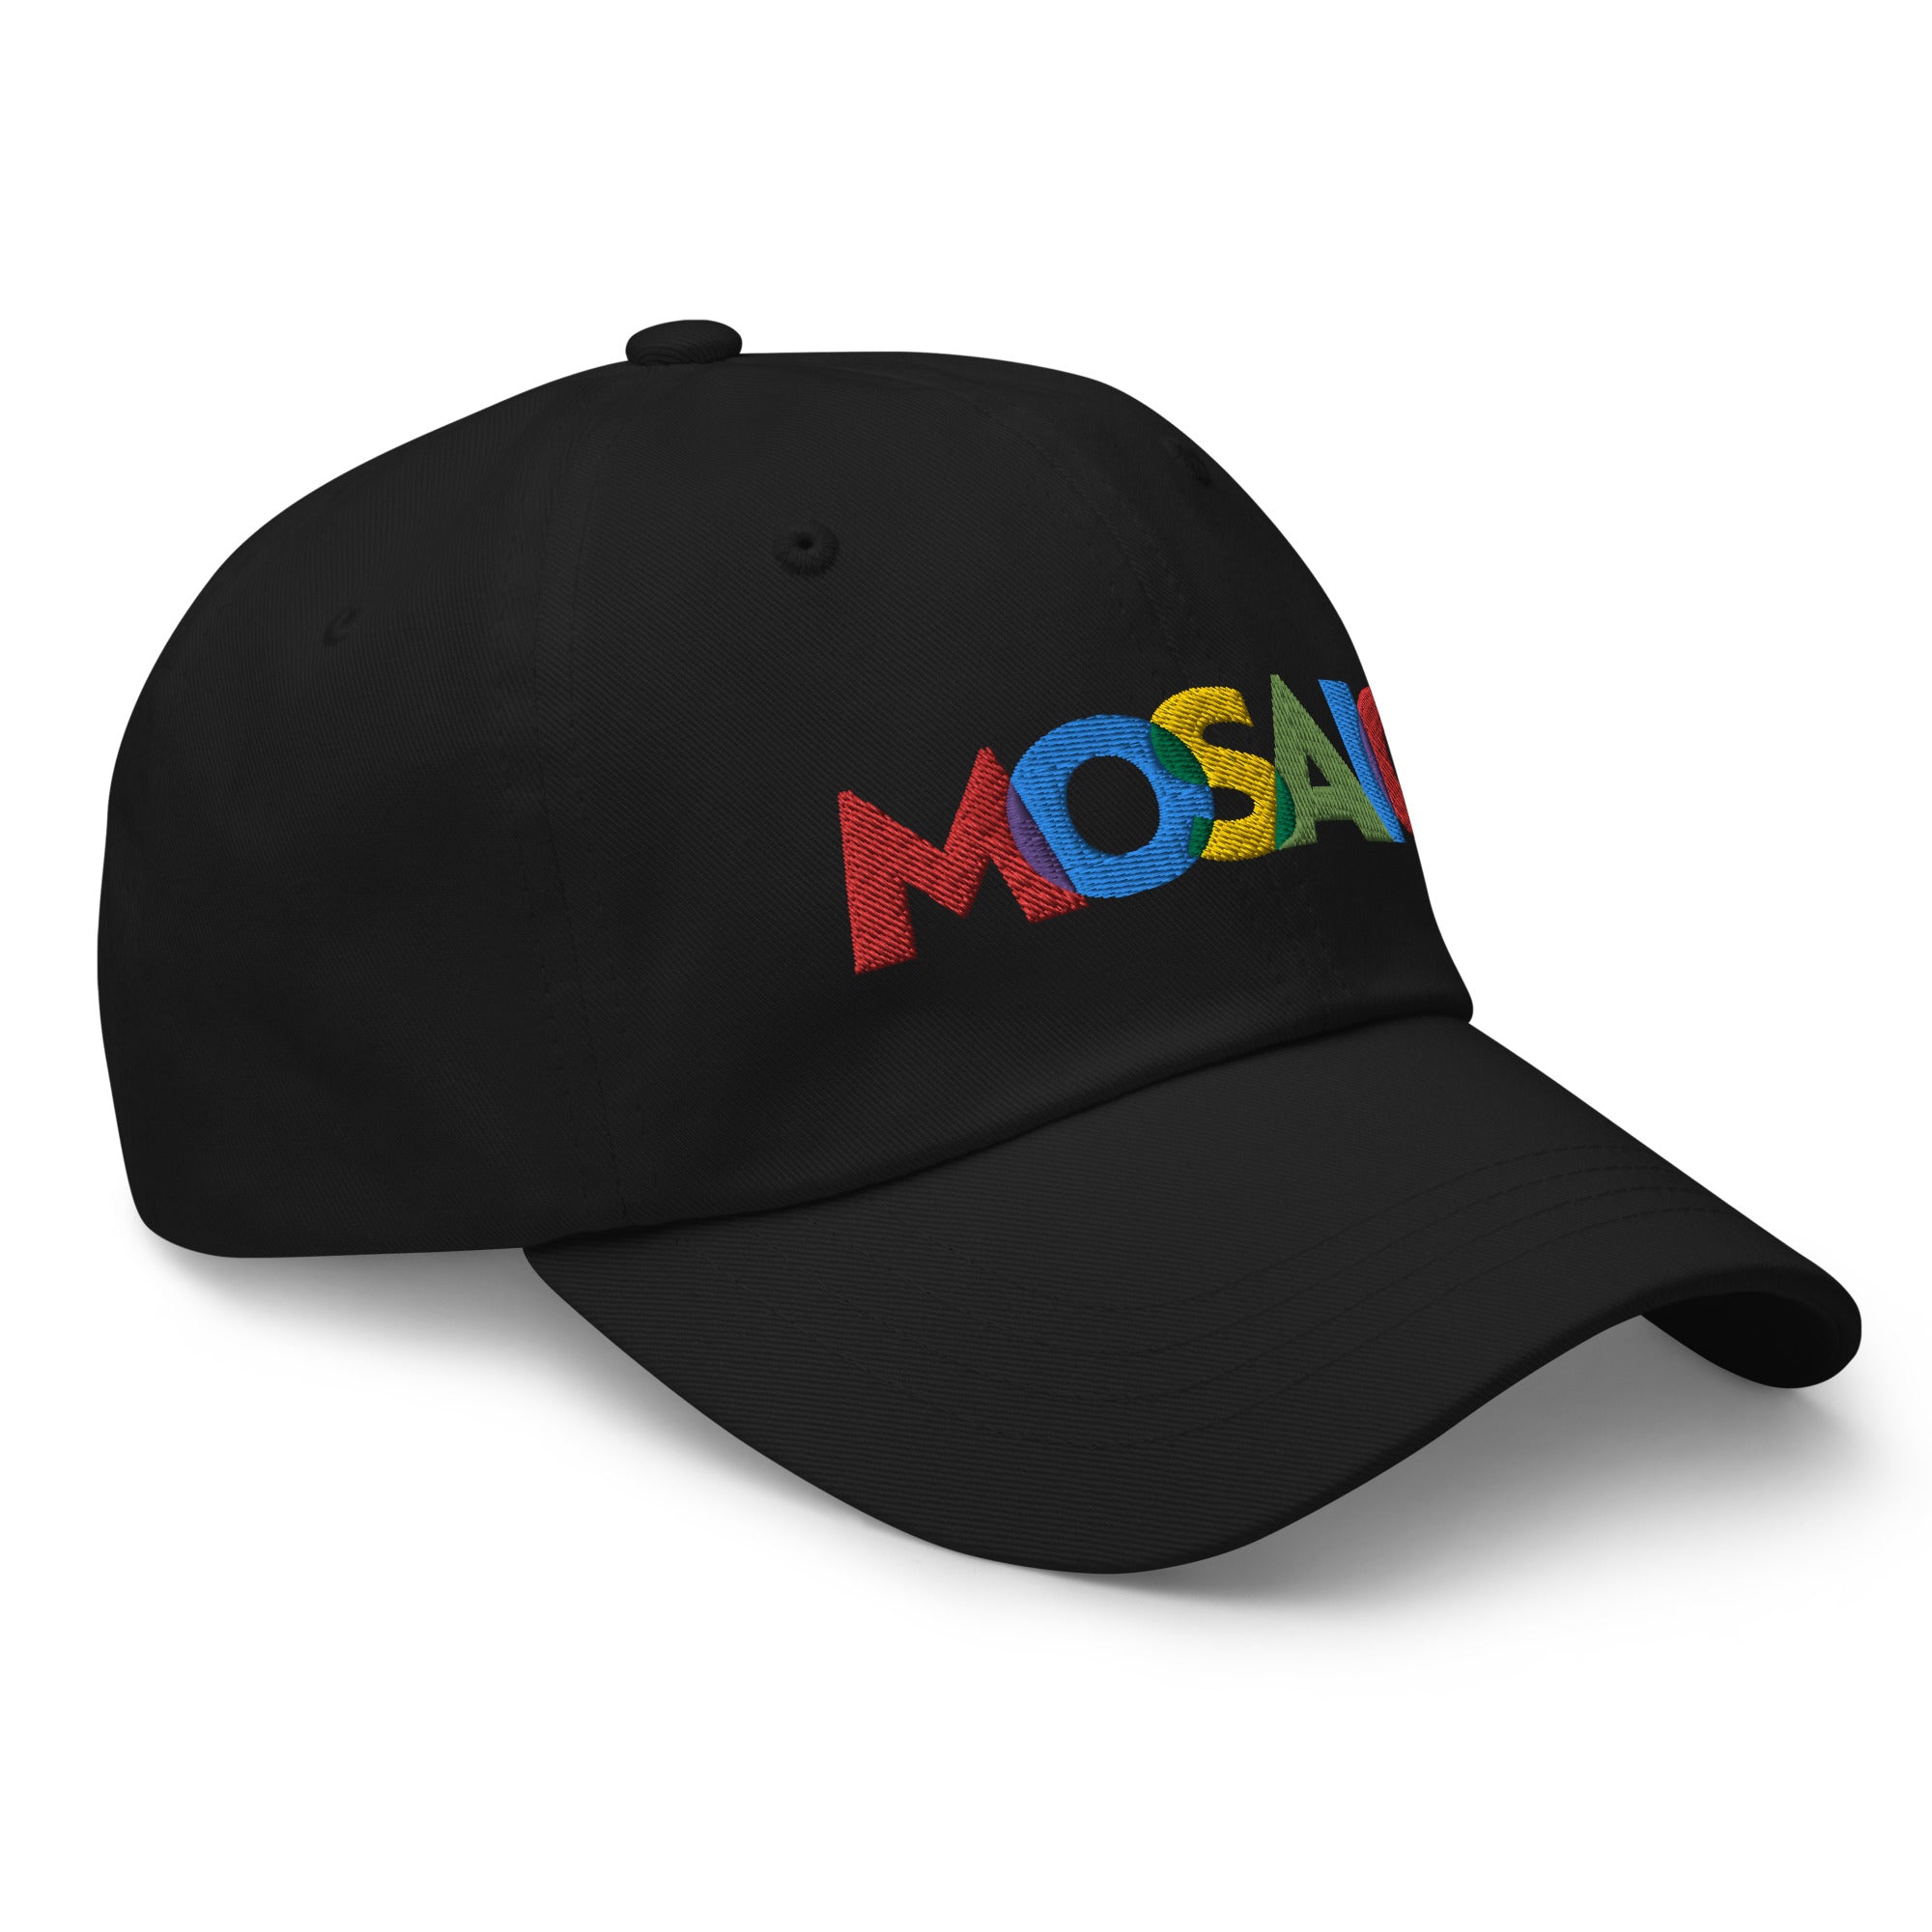 Mosaic: Dad Hat